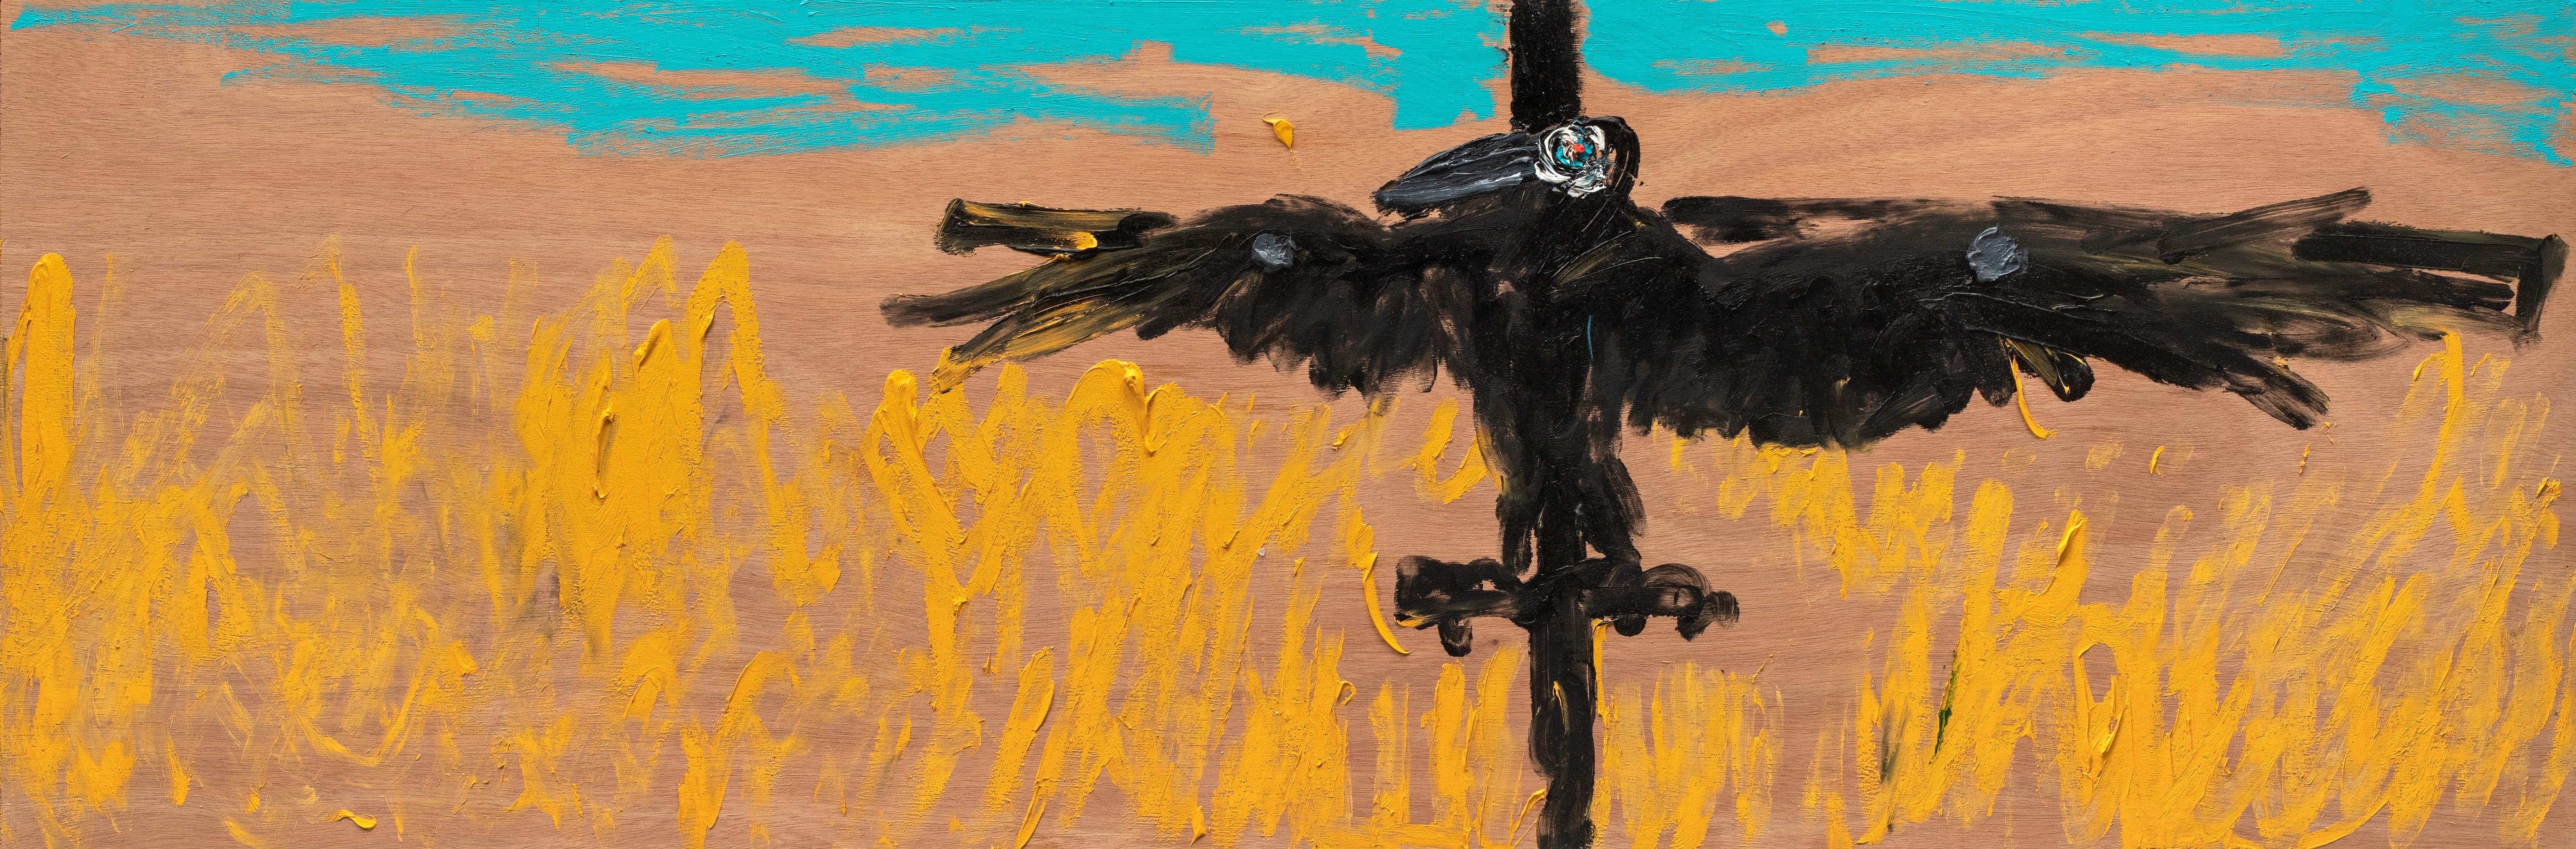 Field Nicolas Kennett 21e siècle peinture britannique paysage animal oiseau crow 